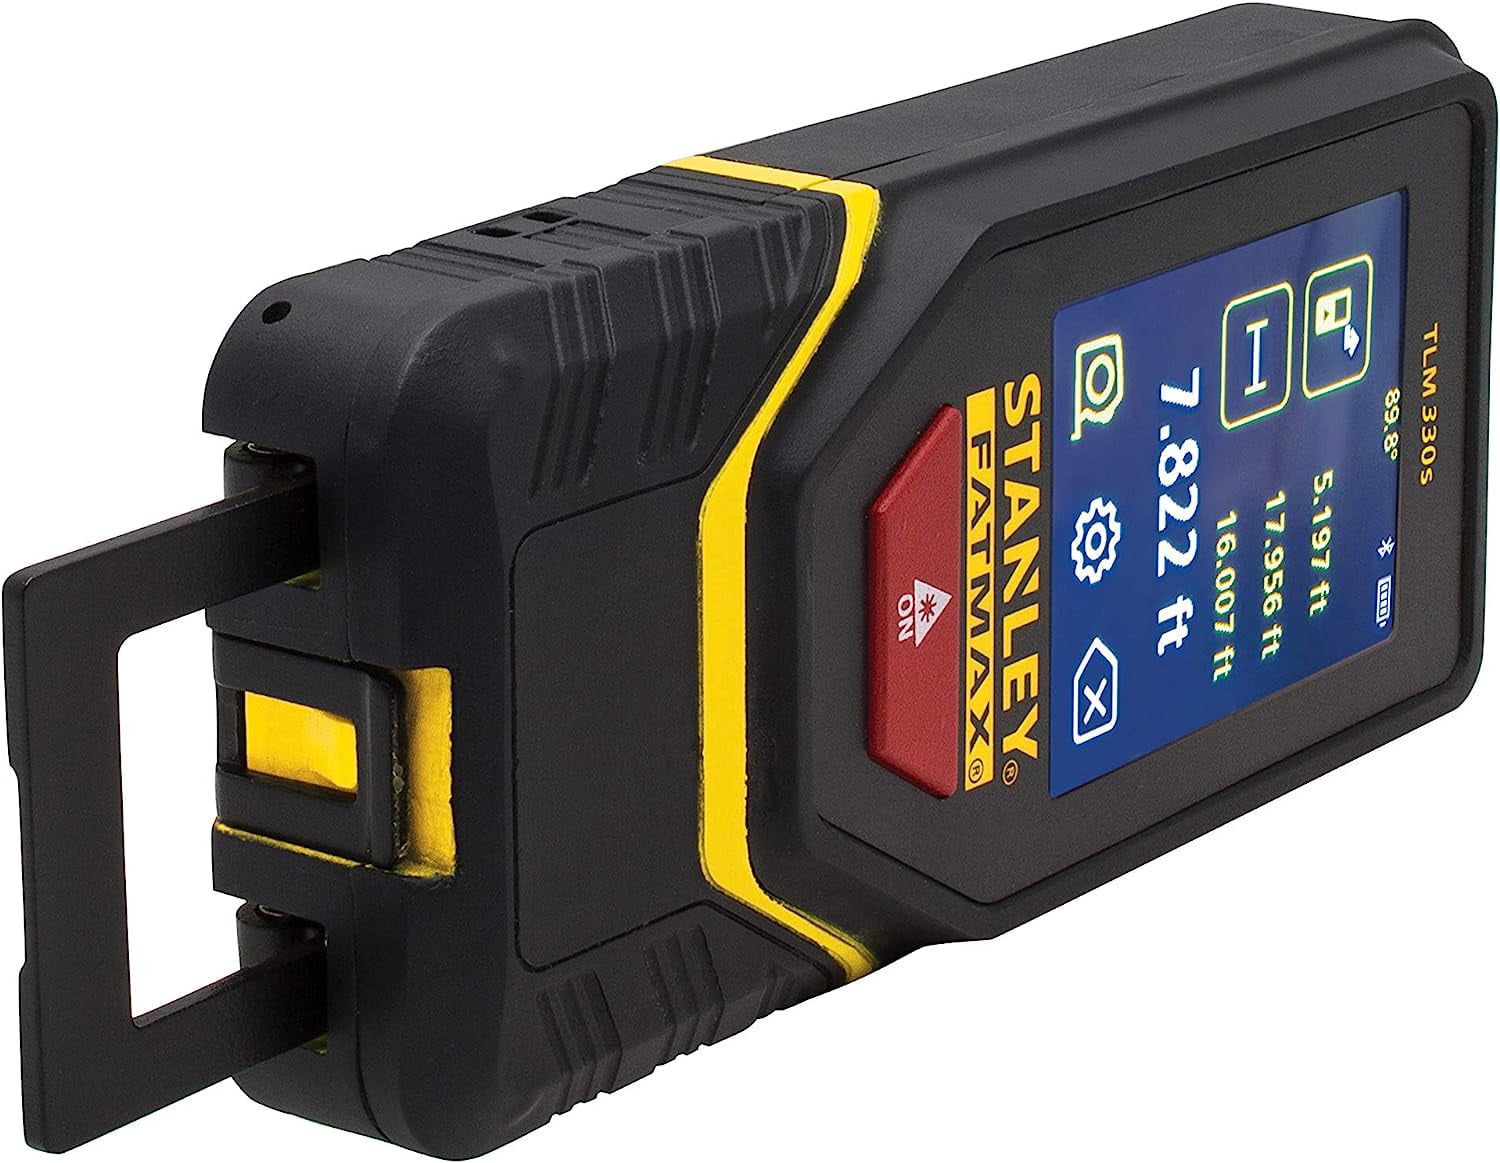 Télémètre laser Stanley TLM30 Pocket - STANLEY - STHT9-77425